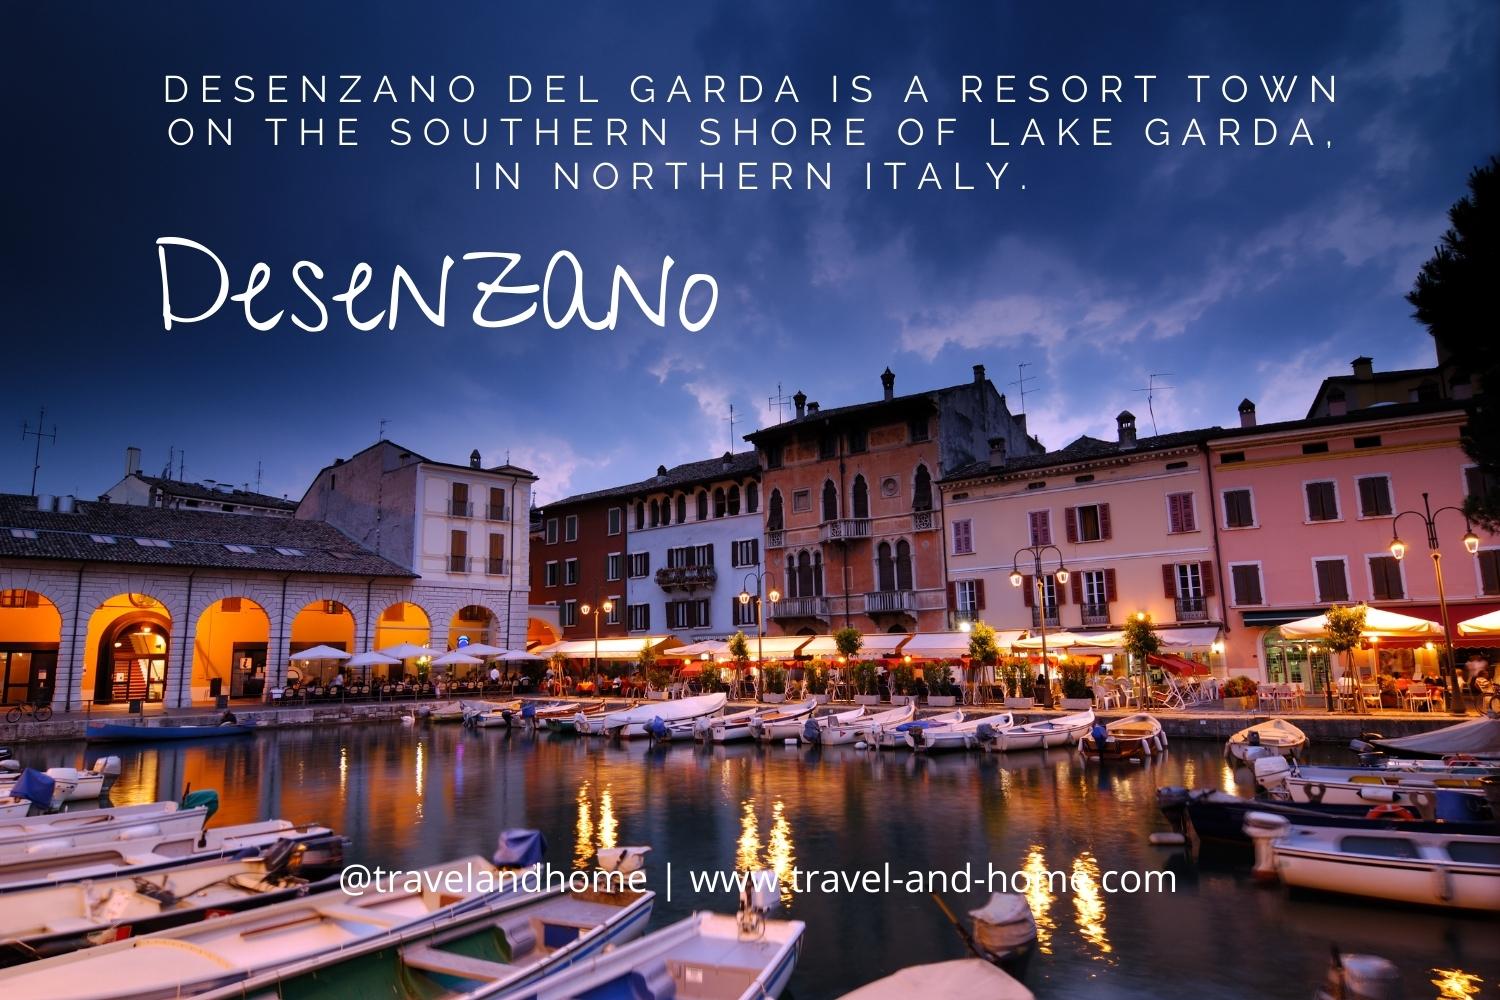 Visit Desenzano del Garda a resort town on the southern shore of Lake Garda in northern Italy.